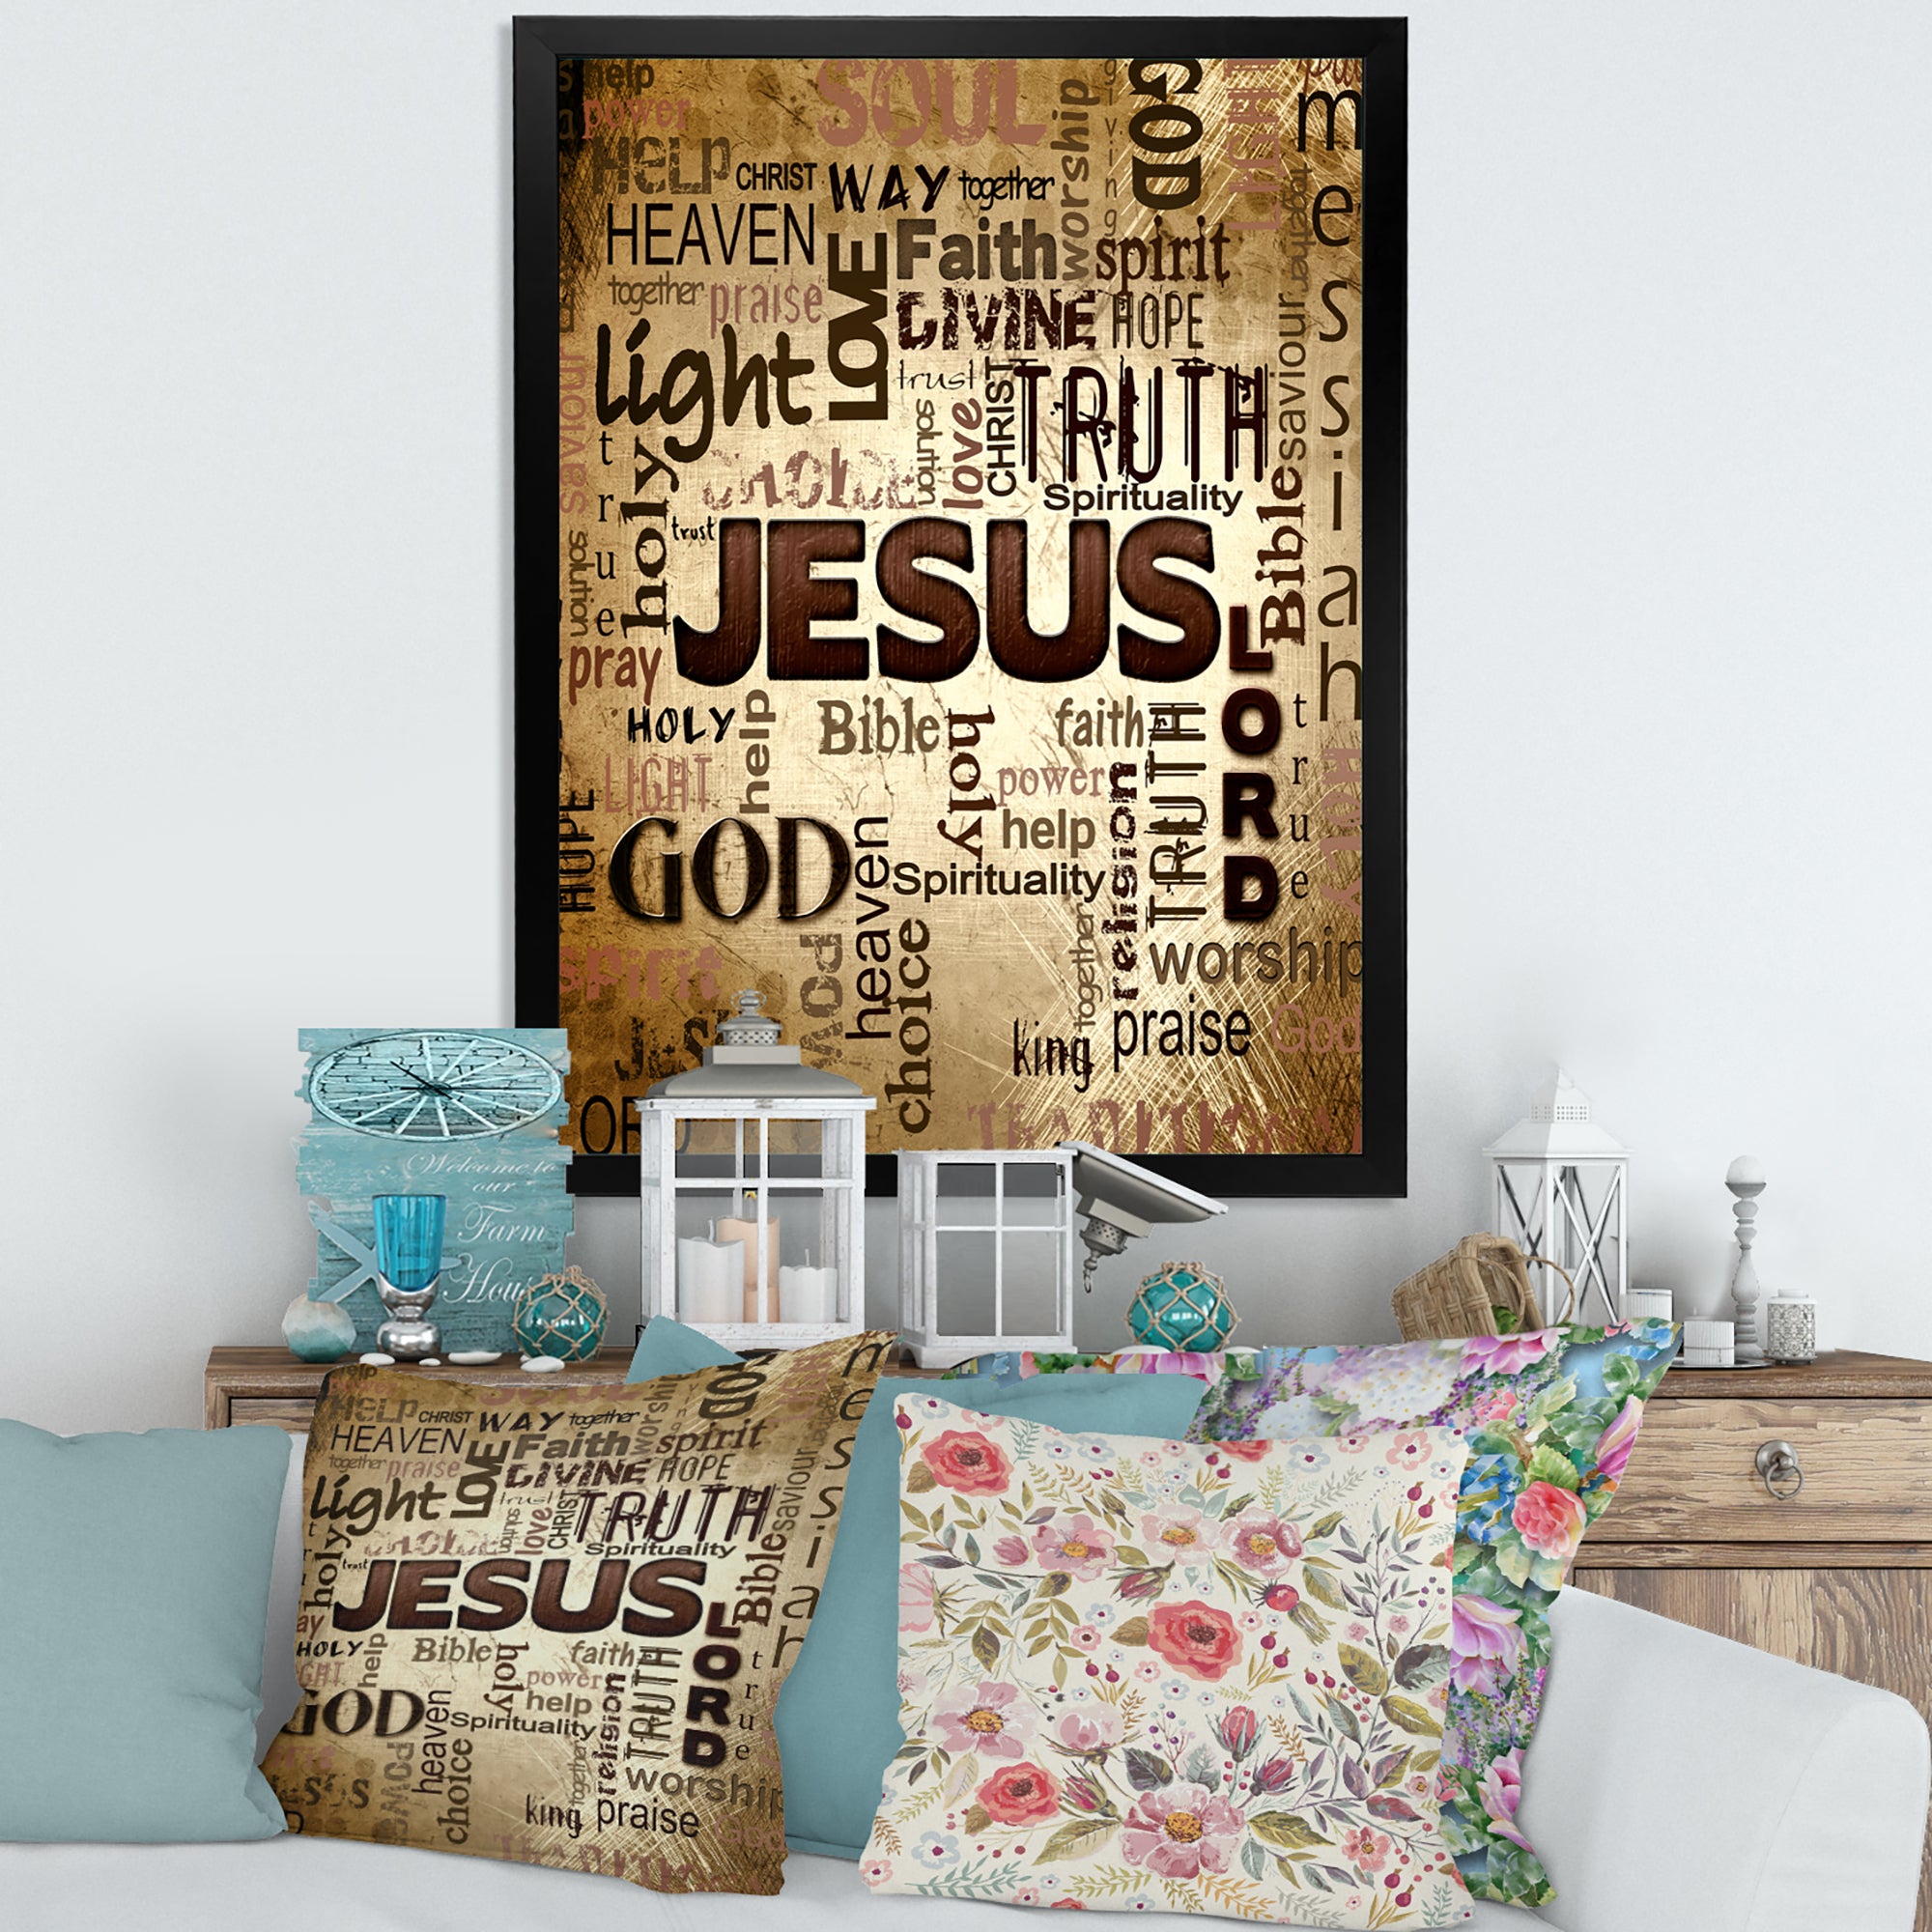 Jesus' word cloud in grunge background